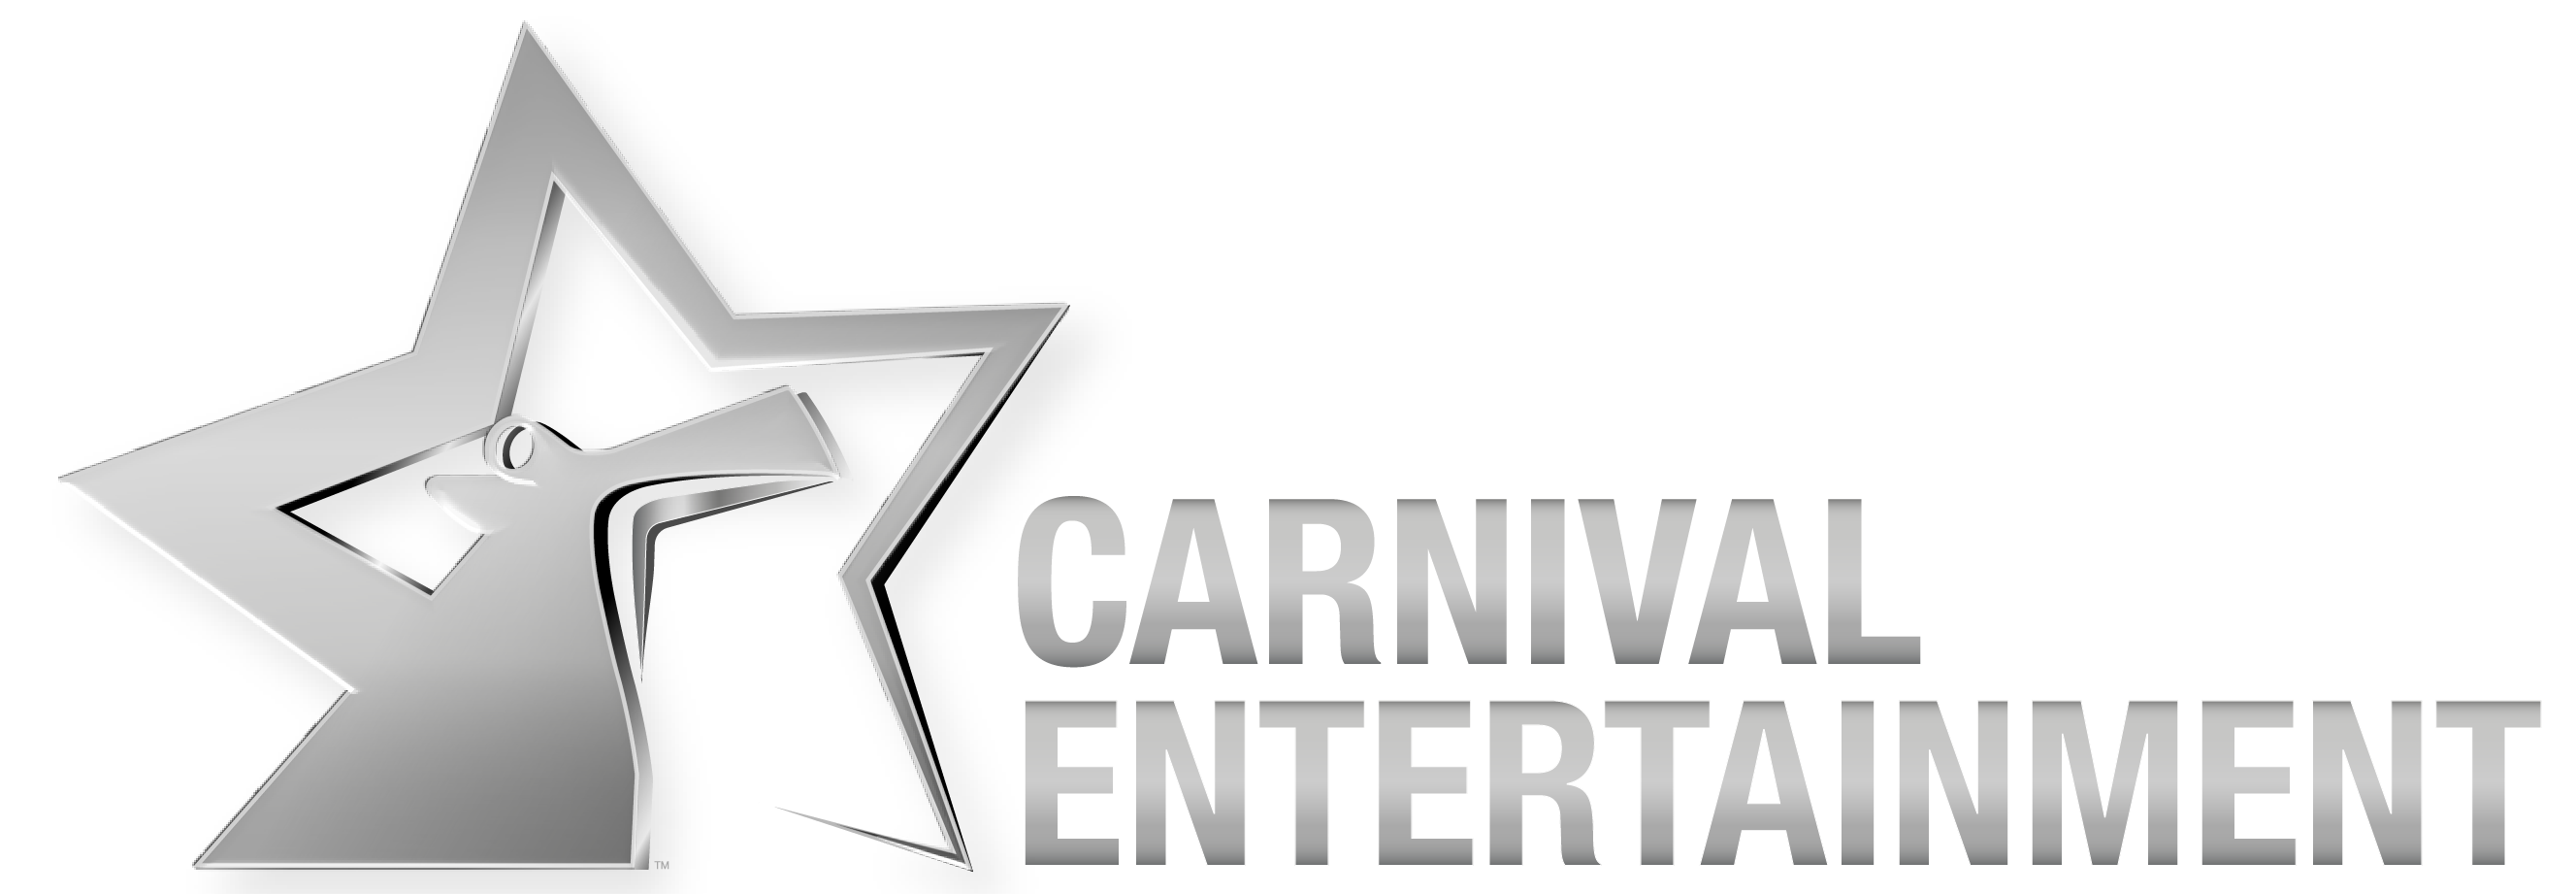 carnival cruise line job hiring